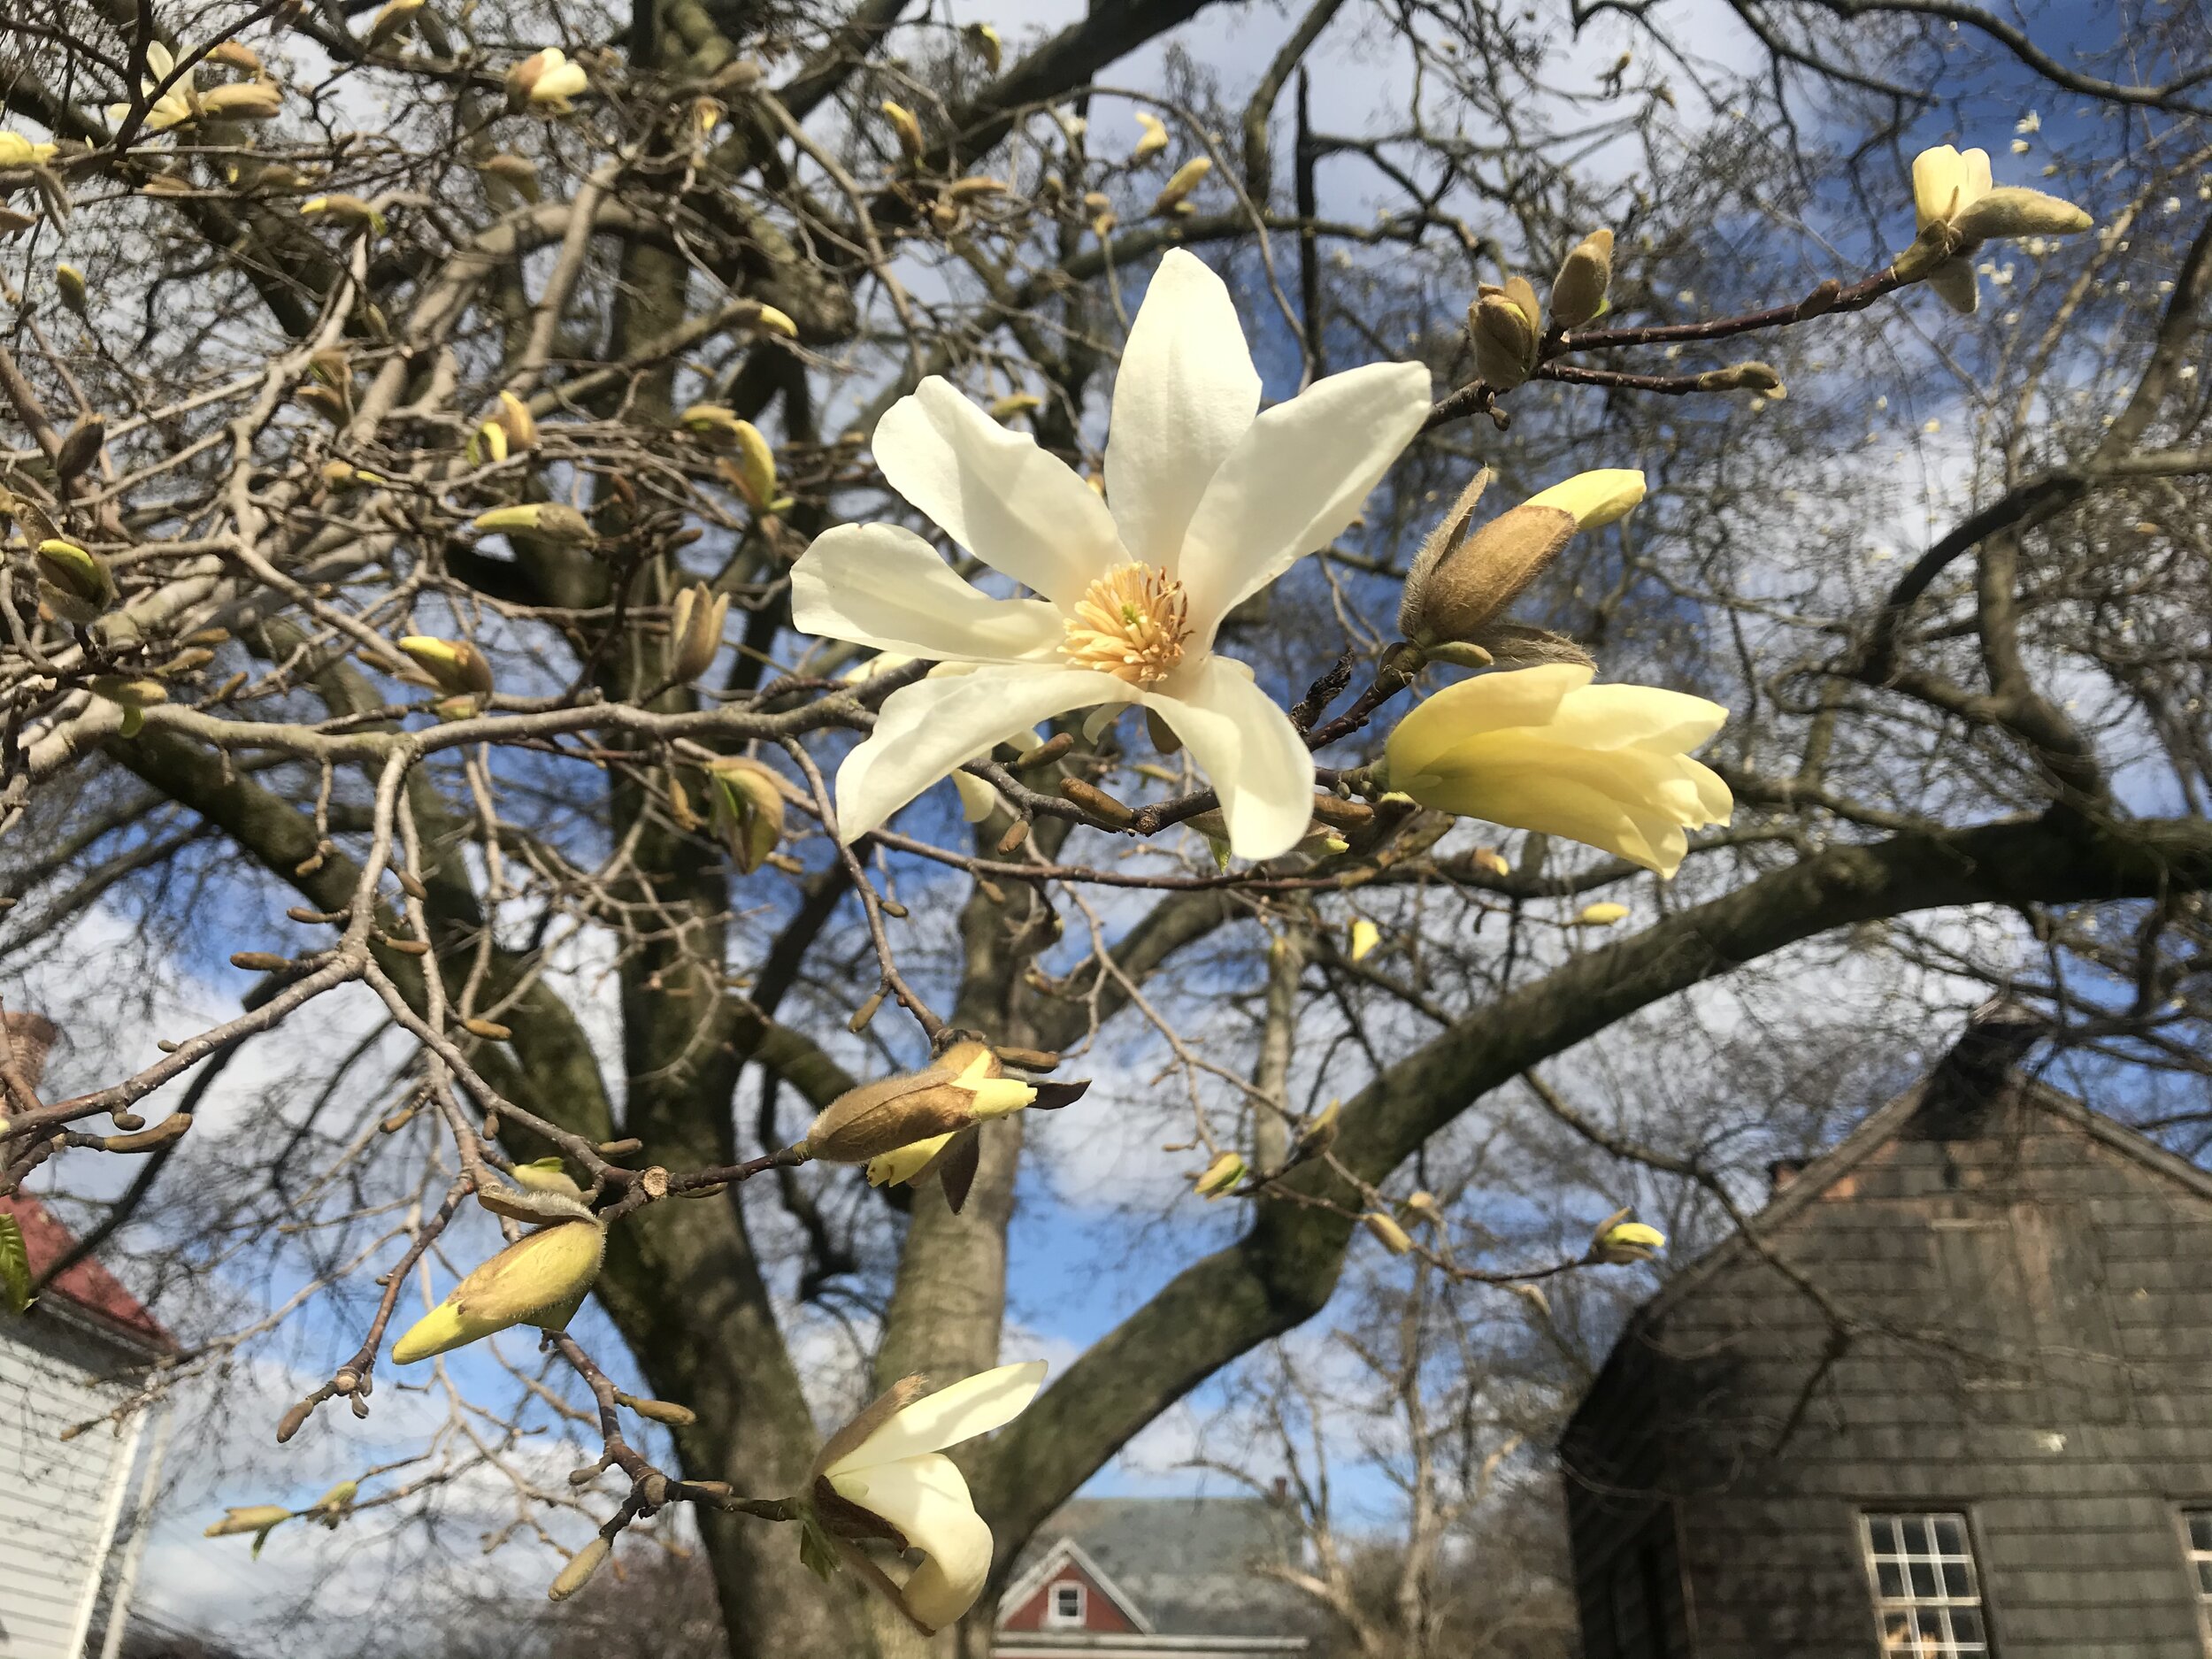 A Yellow Star Magnolia